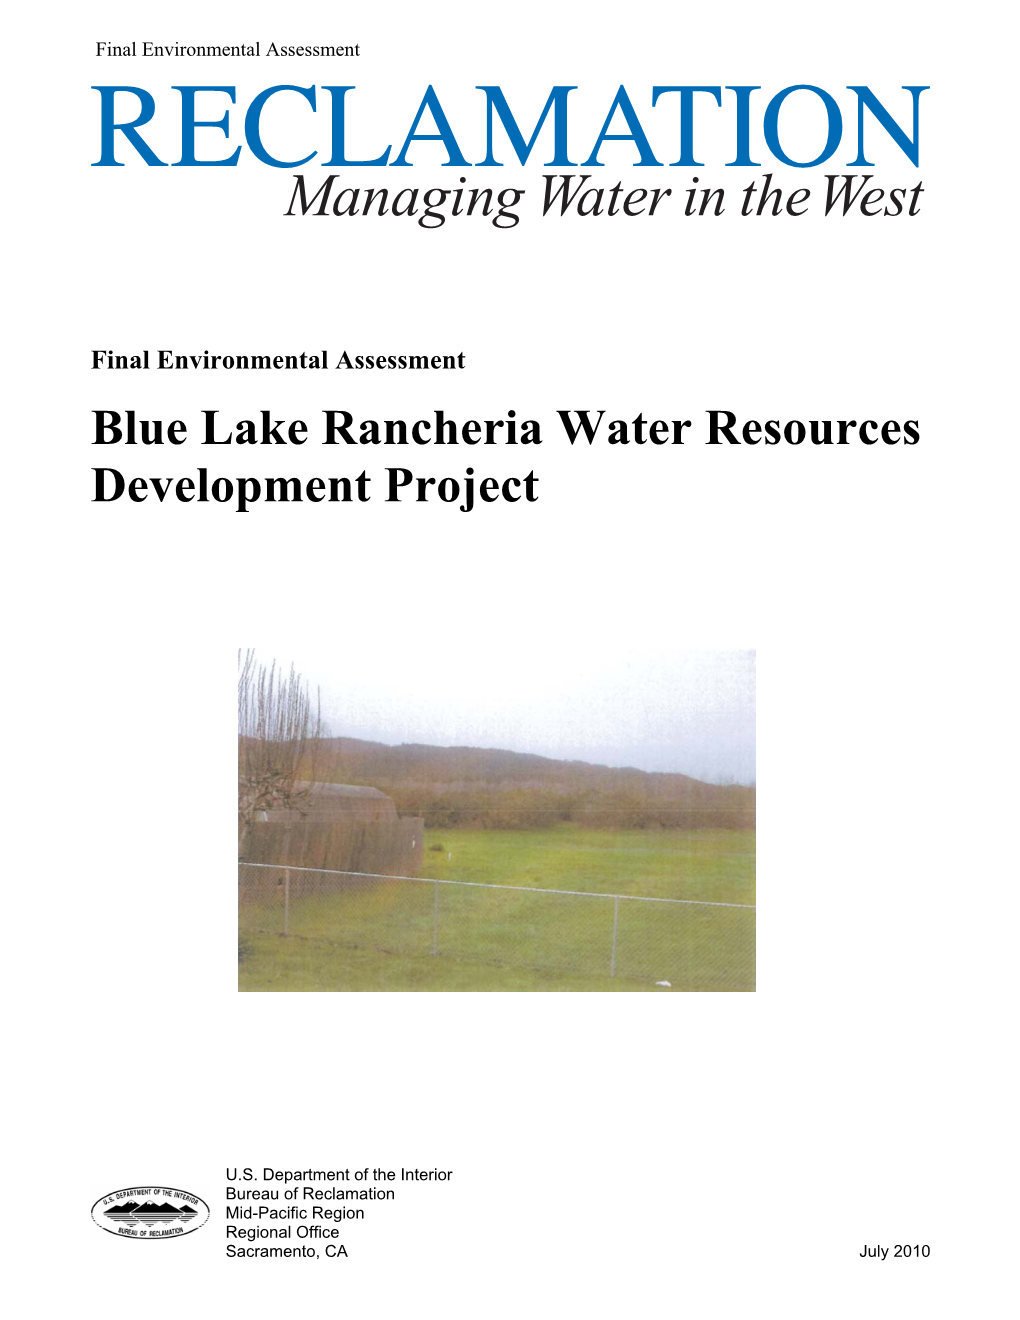 Blue Lake Rancheria Water Resources Development Project